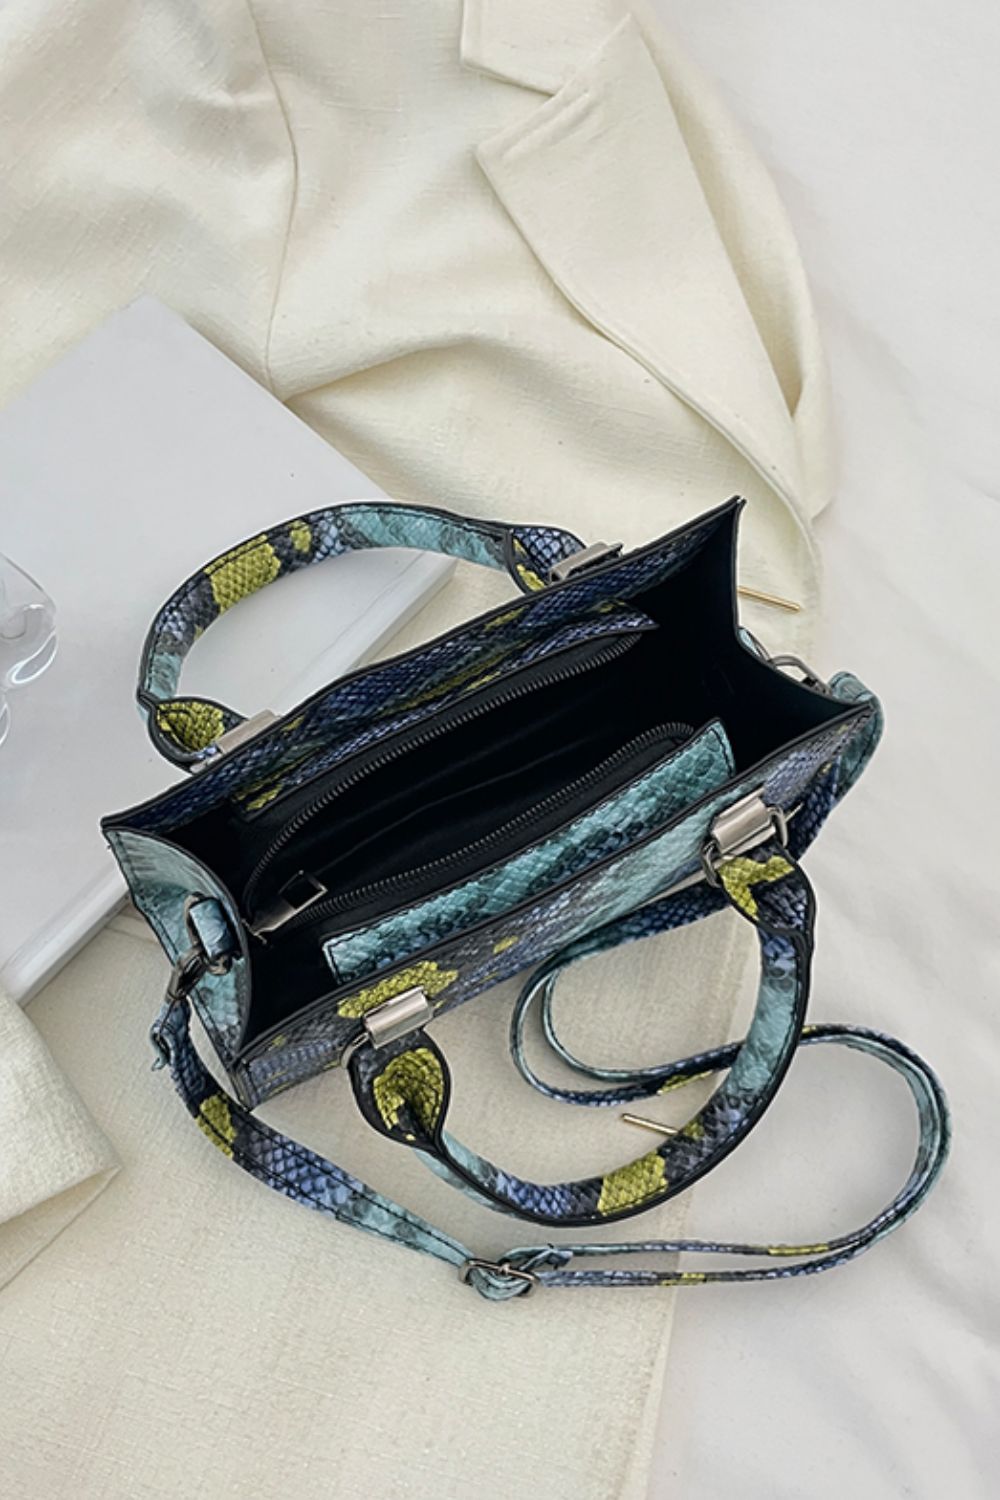 Snakeskin Print PU Leather Handbag